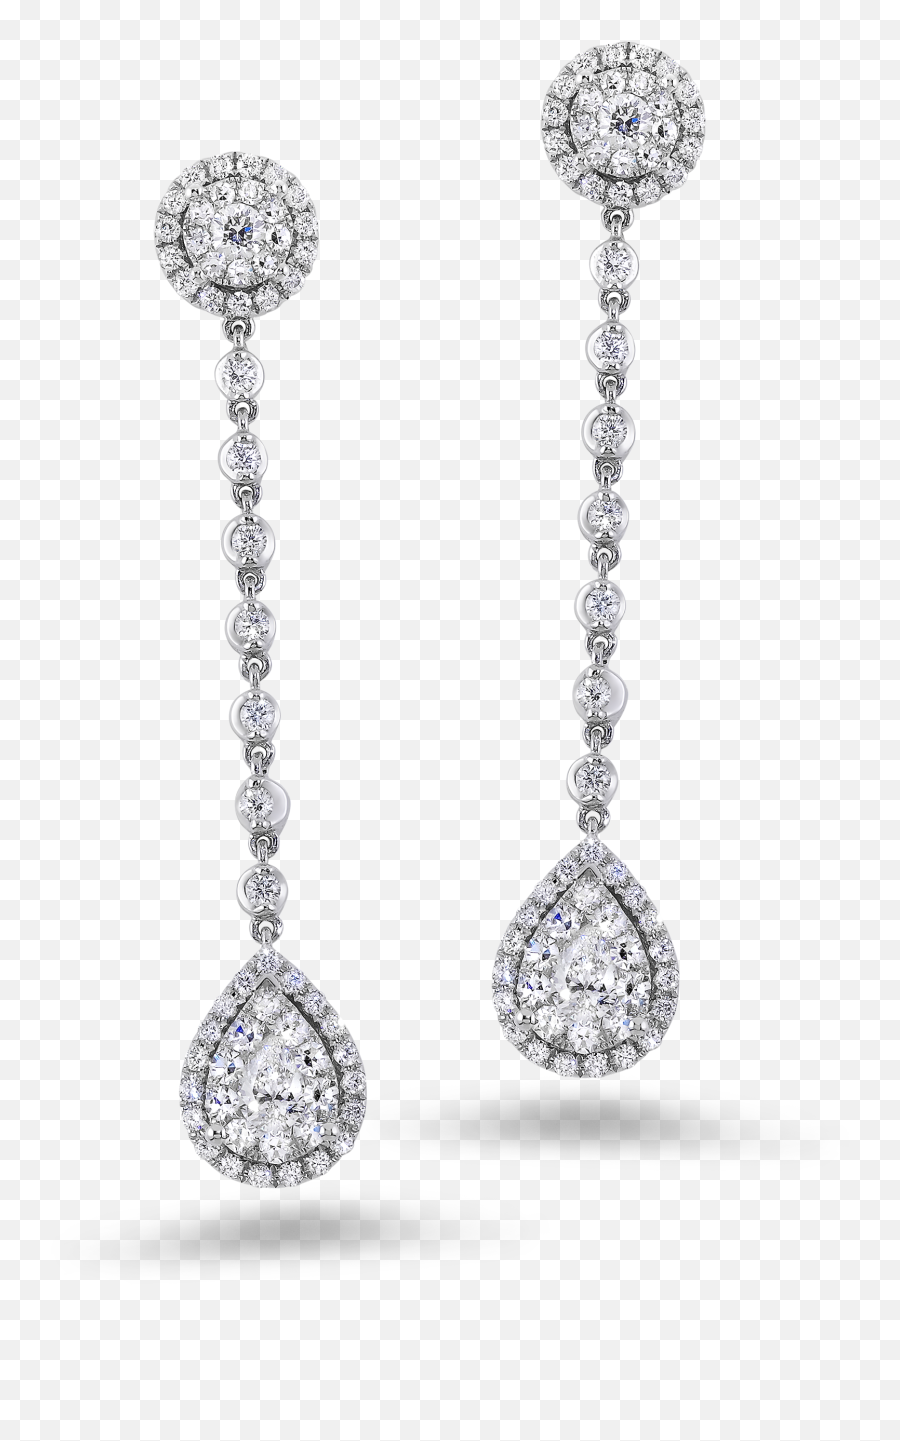 Download Free Png Diamond Earrings - Diamond Earring Transparent Background,Diamond Earring Png